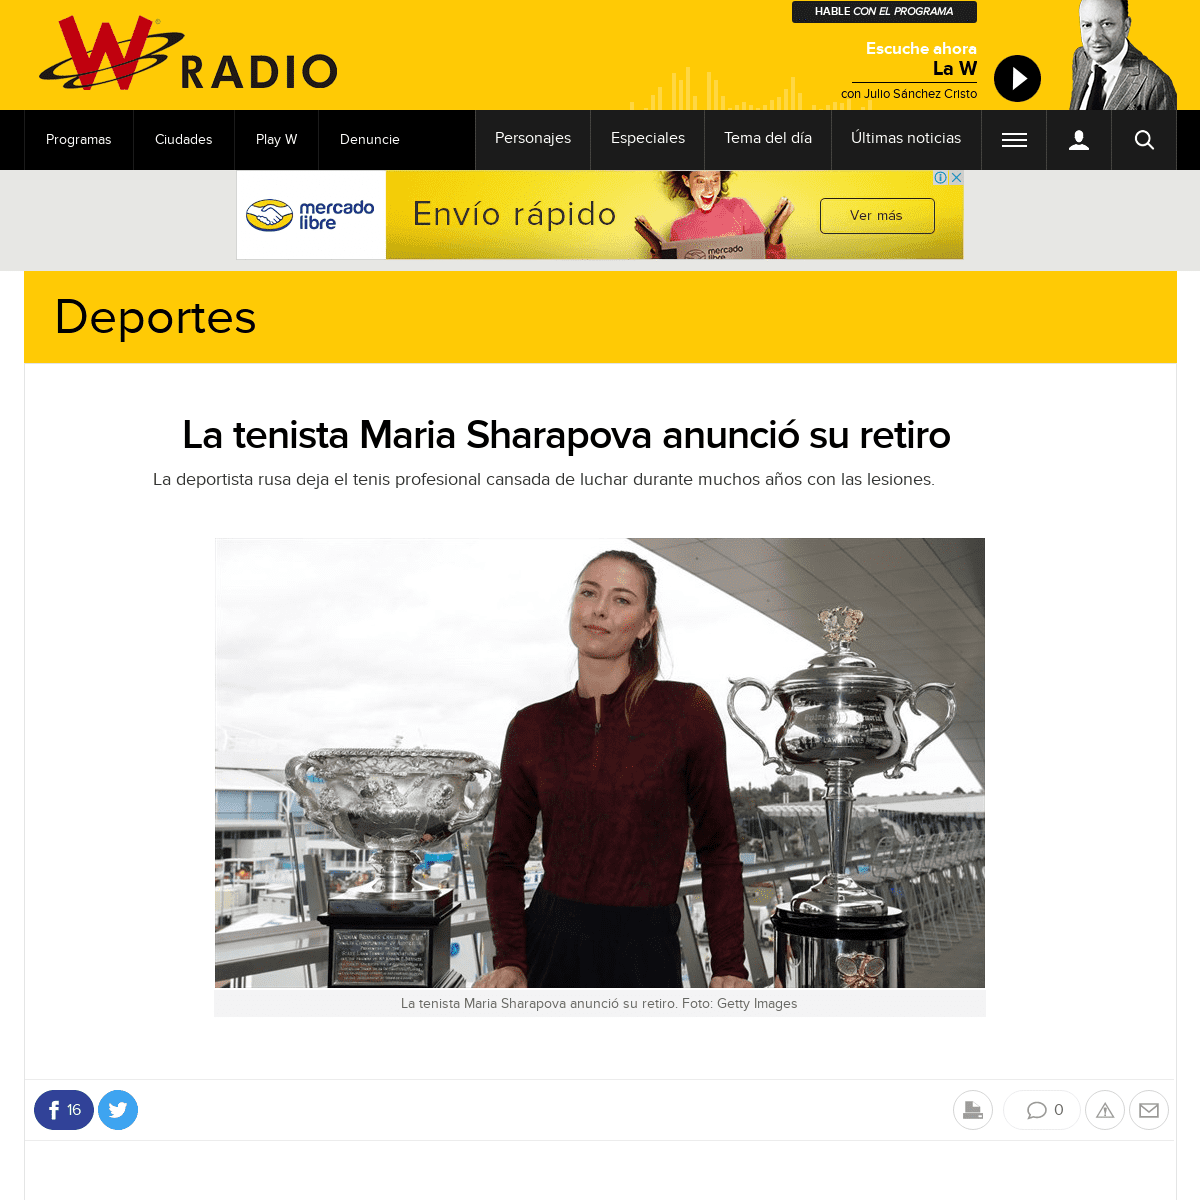 A complete backup of www.wradio.com.co/noticias/deportes/la-tenista-maria-sharapova-anuncio-su-retiro/20200226/nota/4017965.aspx